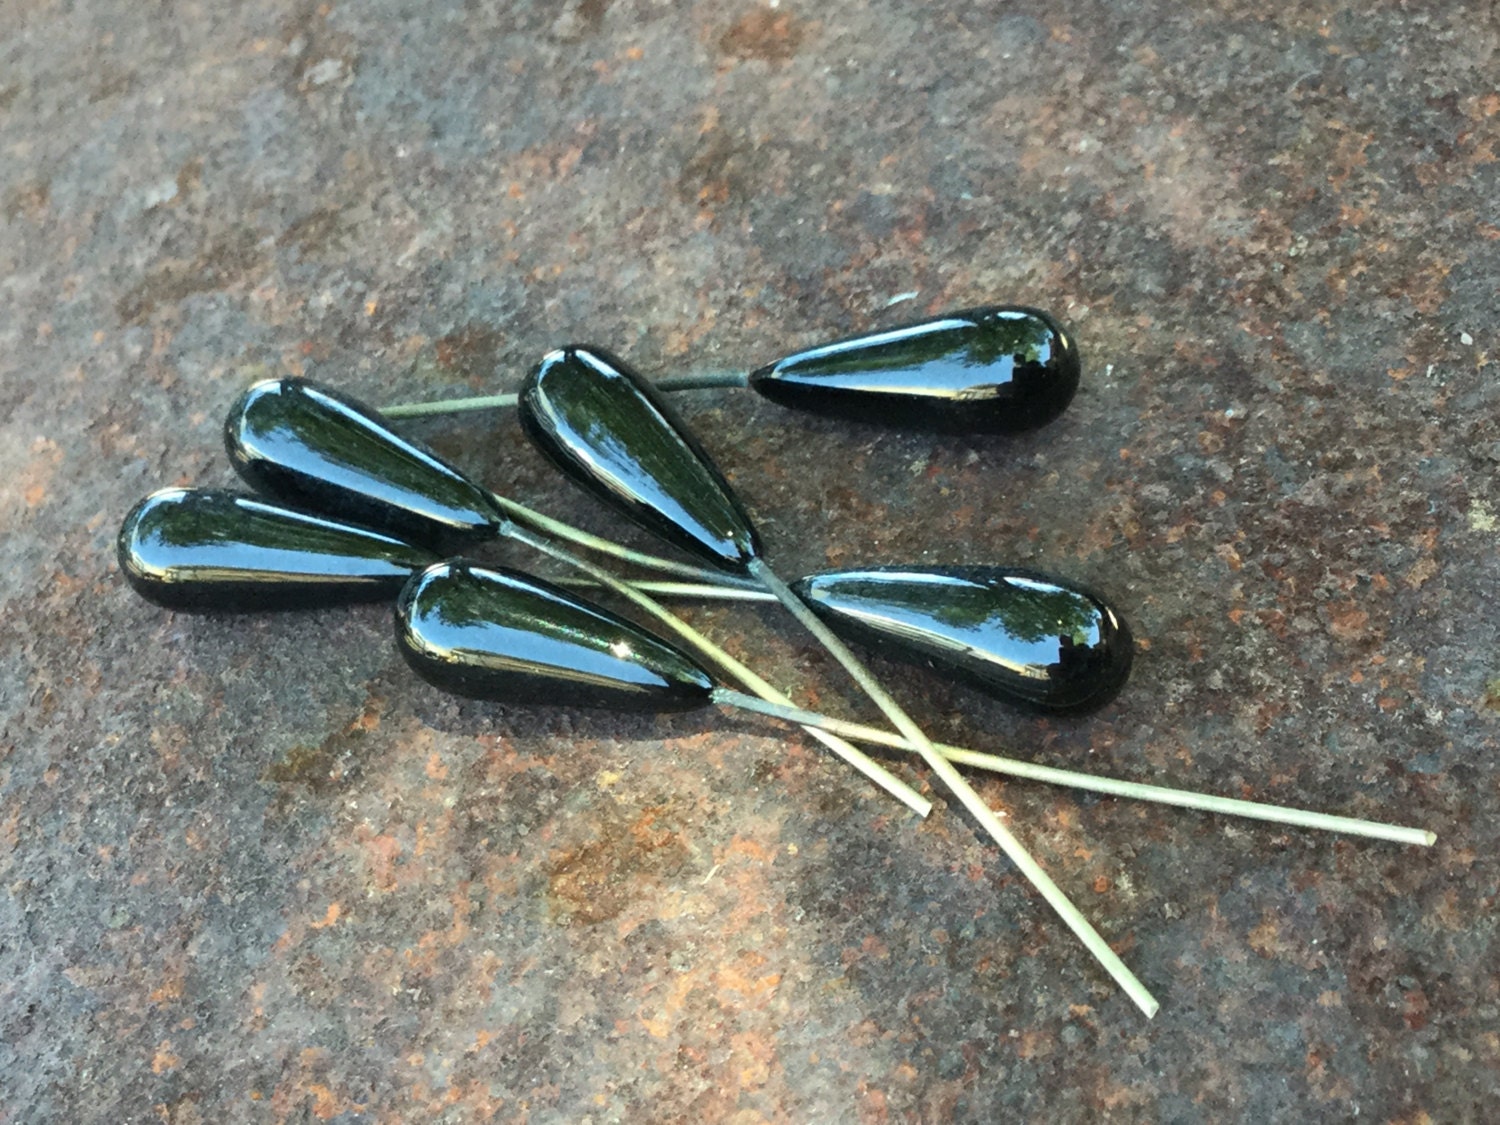 German vintage glass head pins - 40 Pieces - BeadHoliday